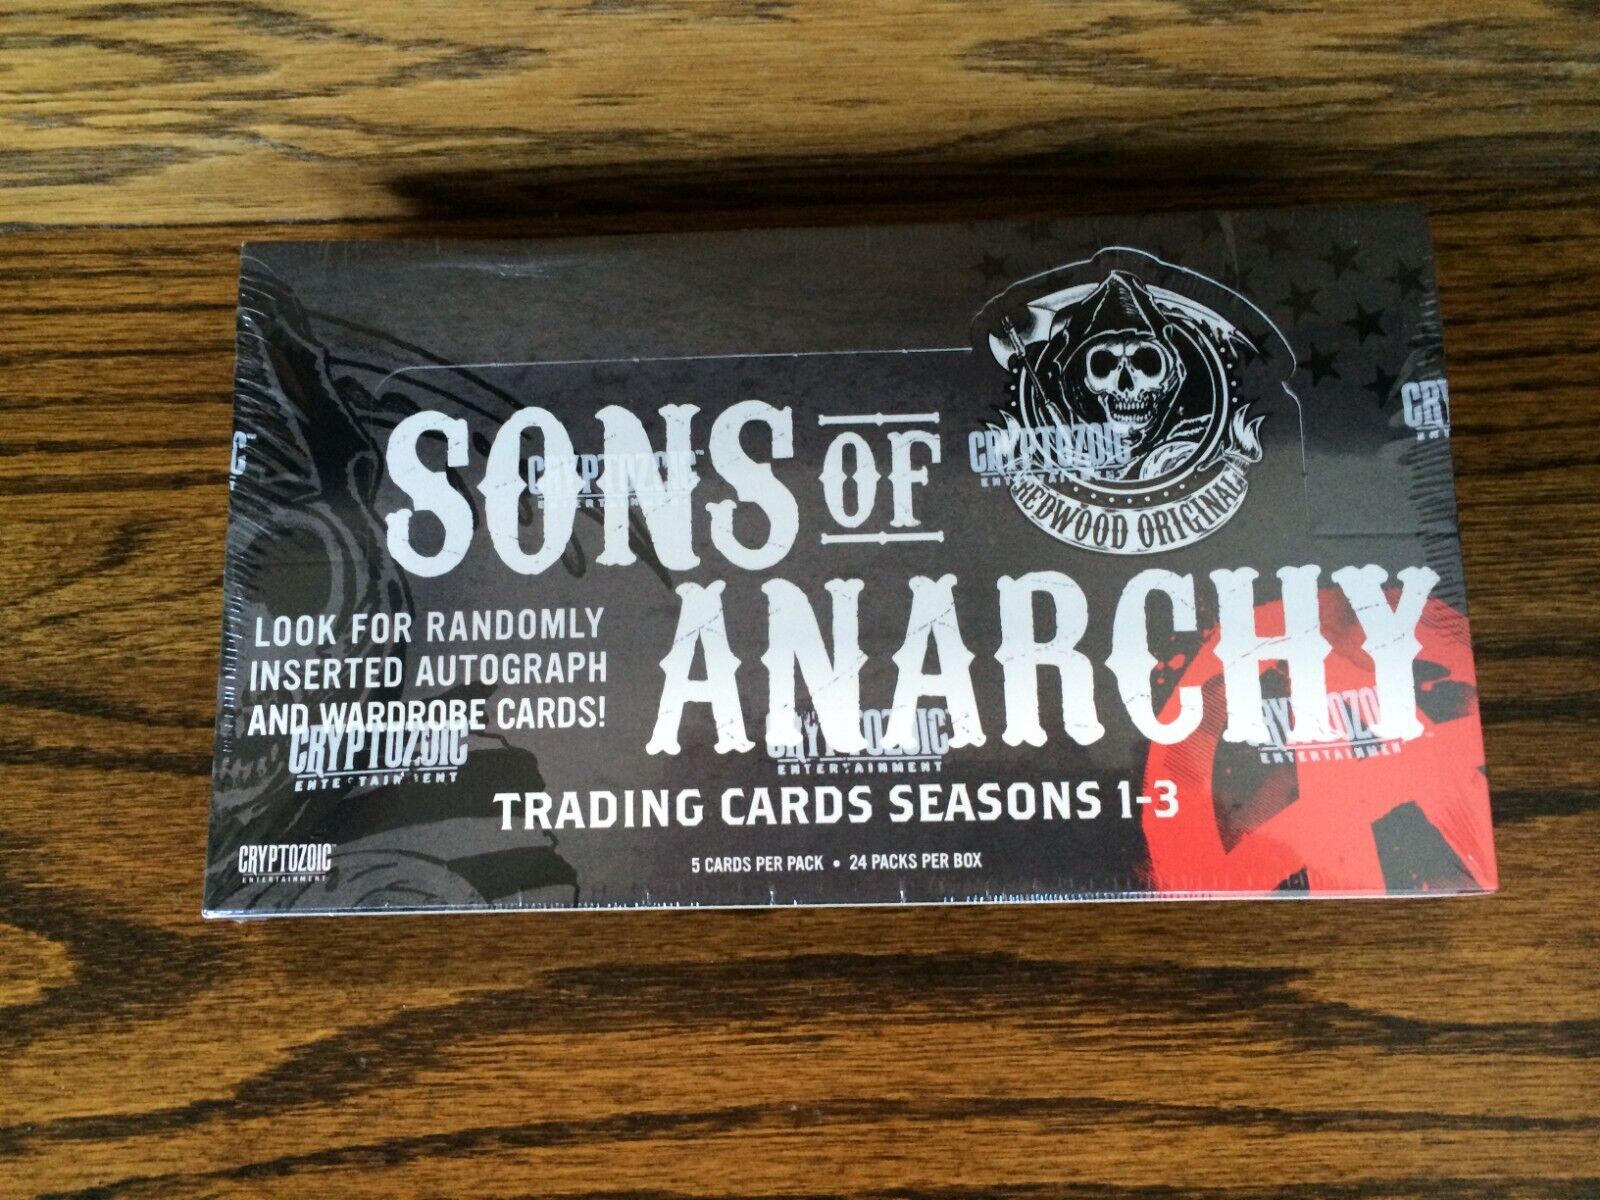 2014 Cryptozoic Sons of Anarchy Seasons 1-3 Sealed Hobby Trading Card Box